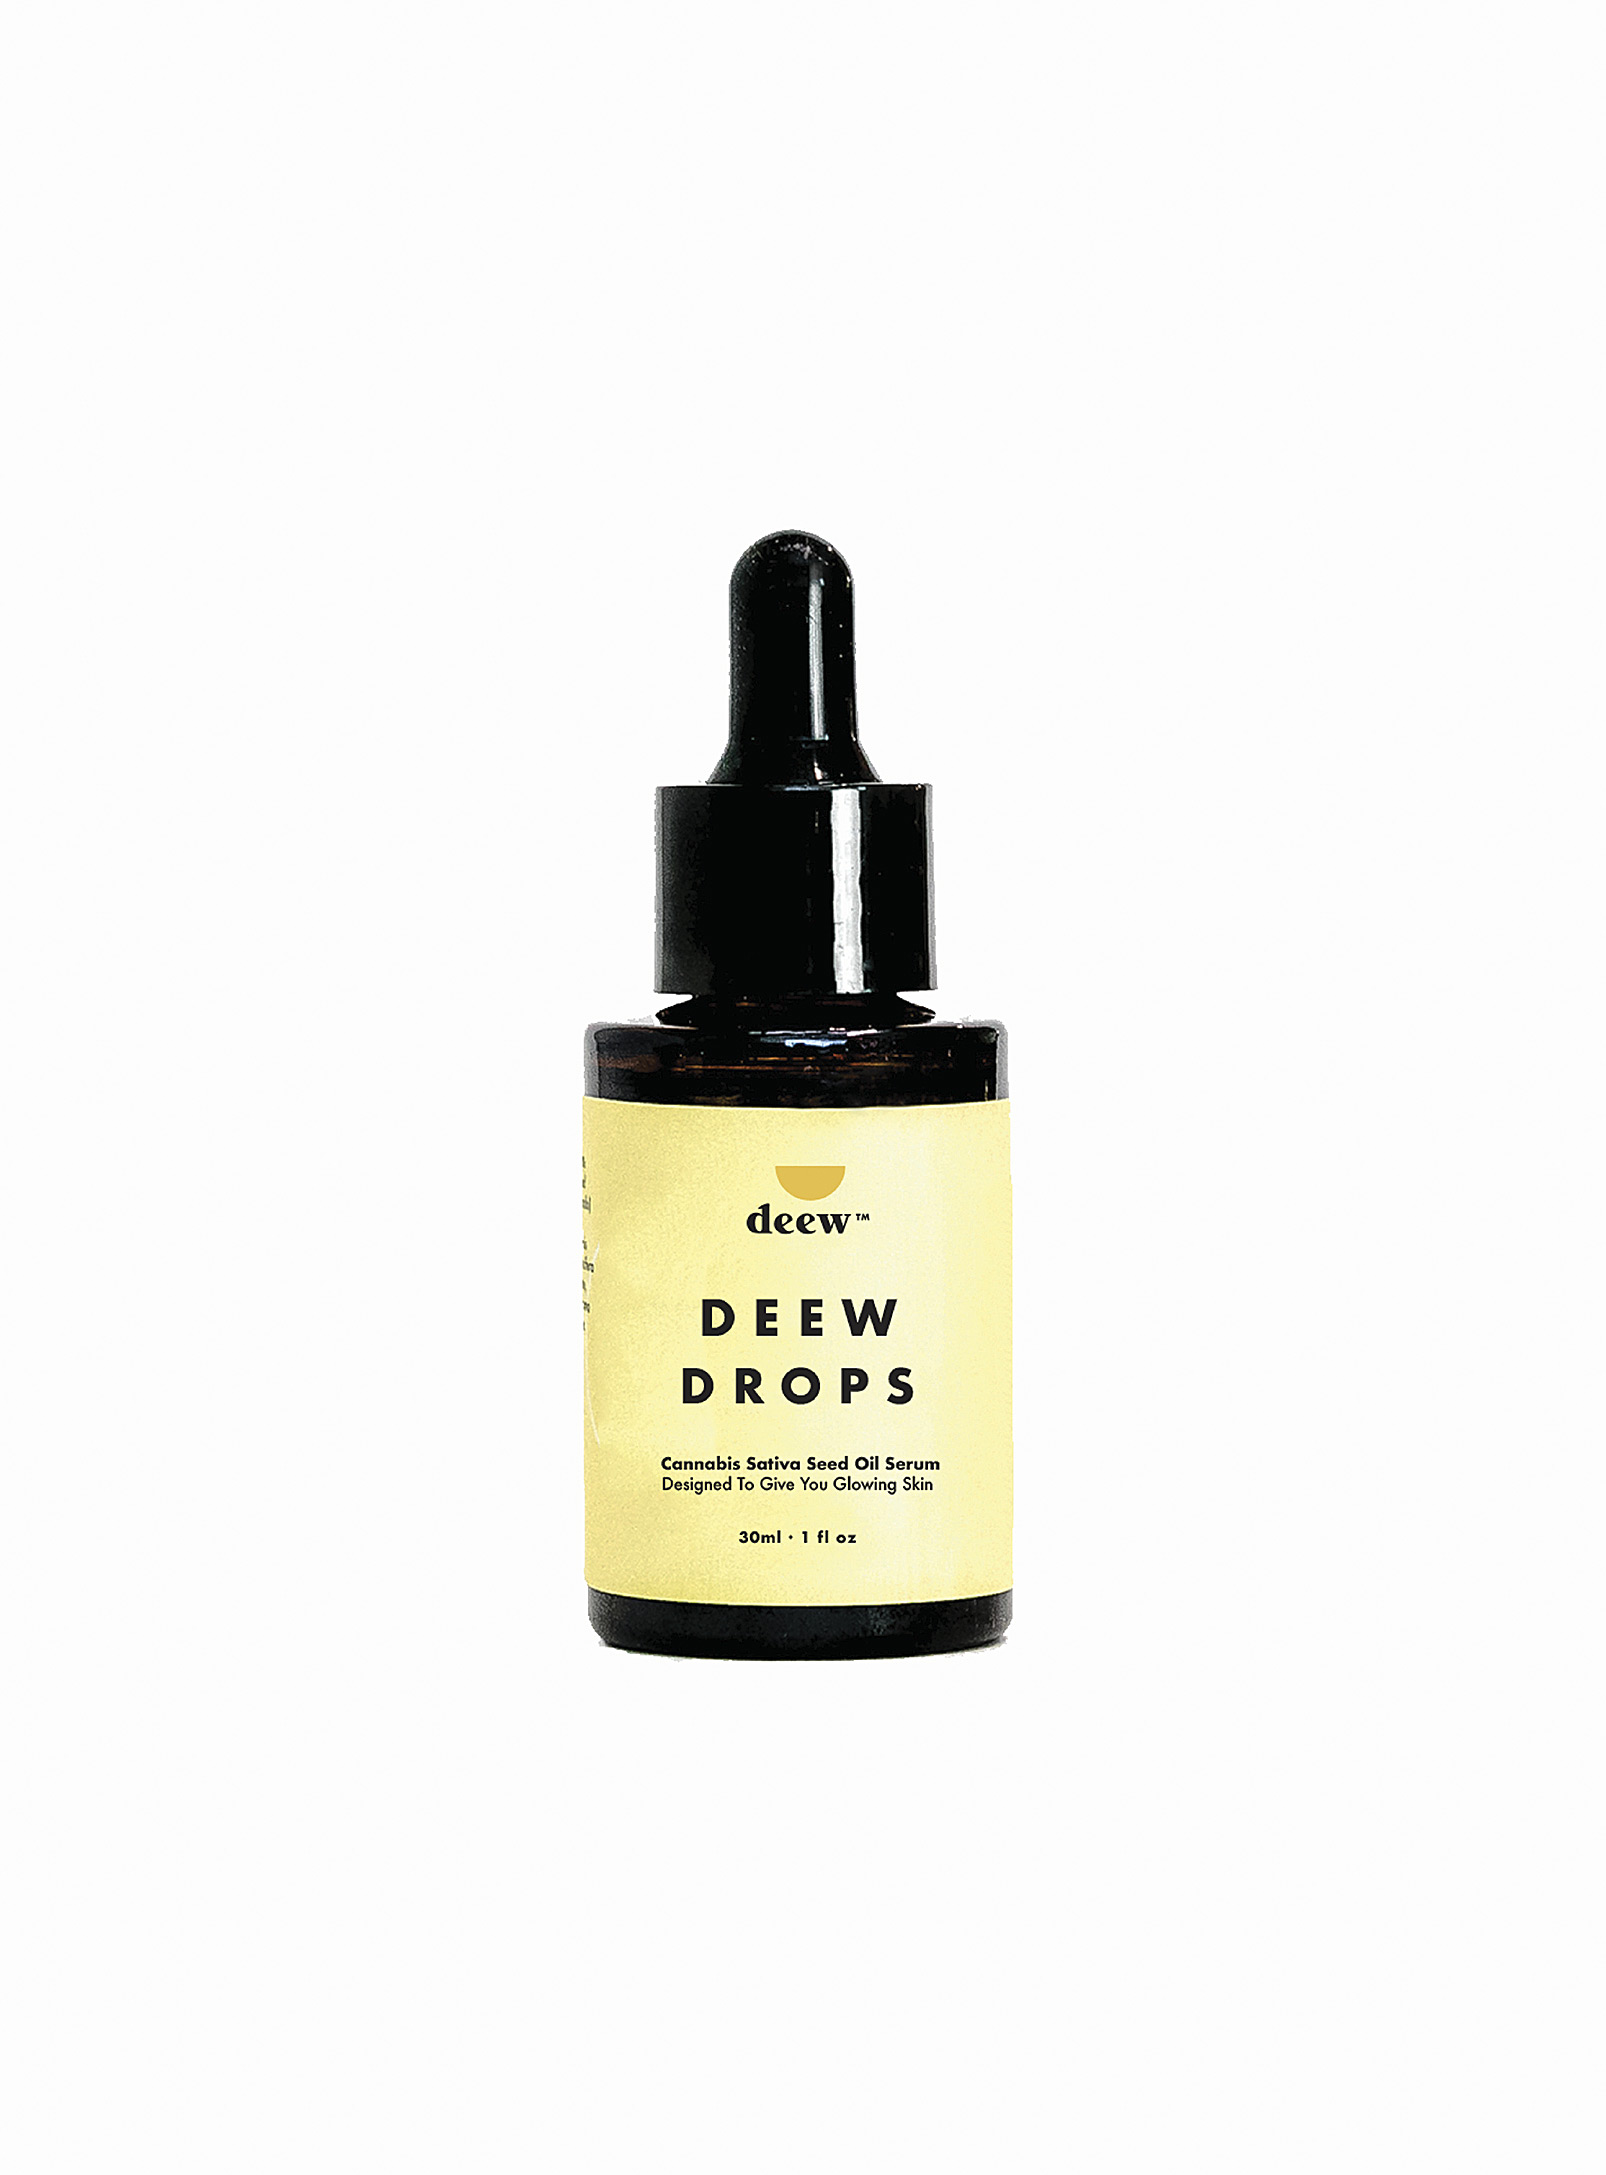 Deew - Drops hemp oil facial oil